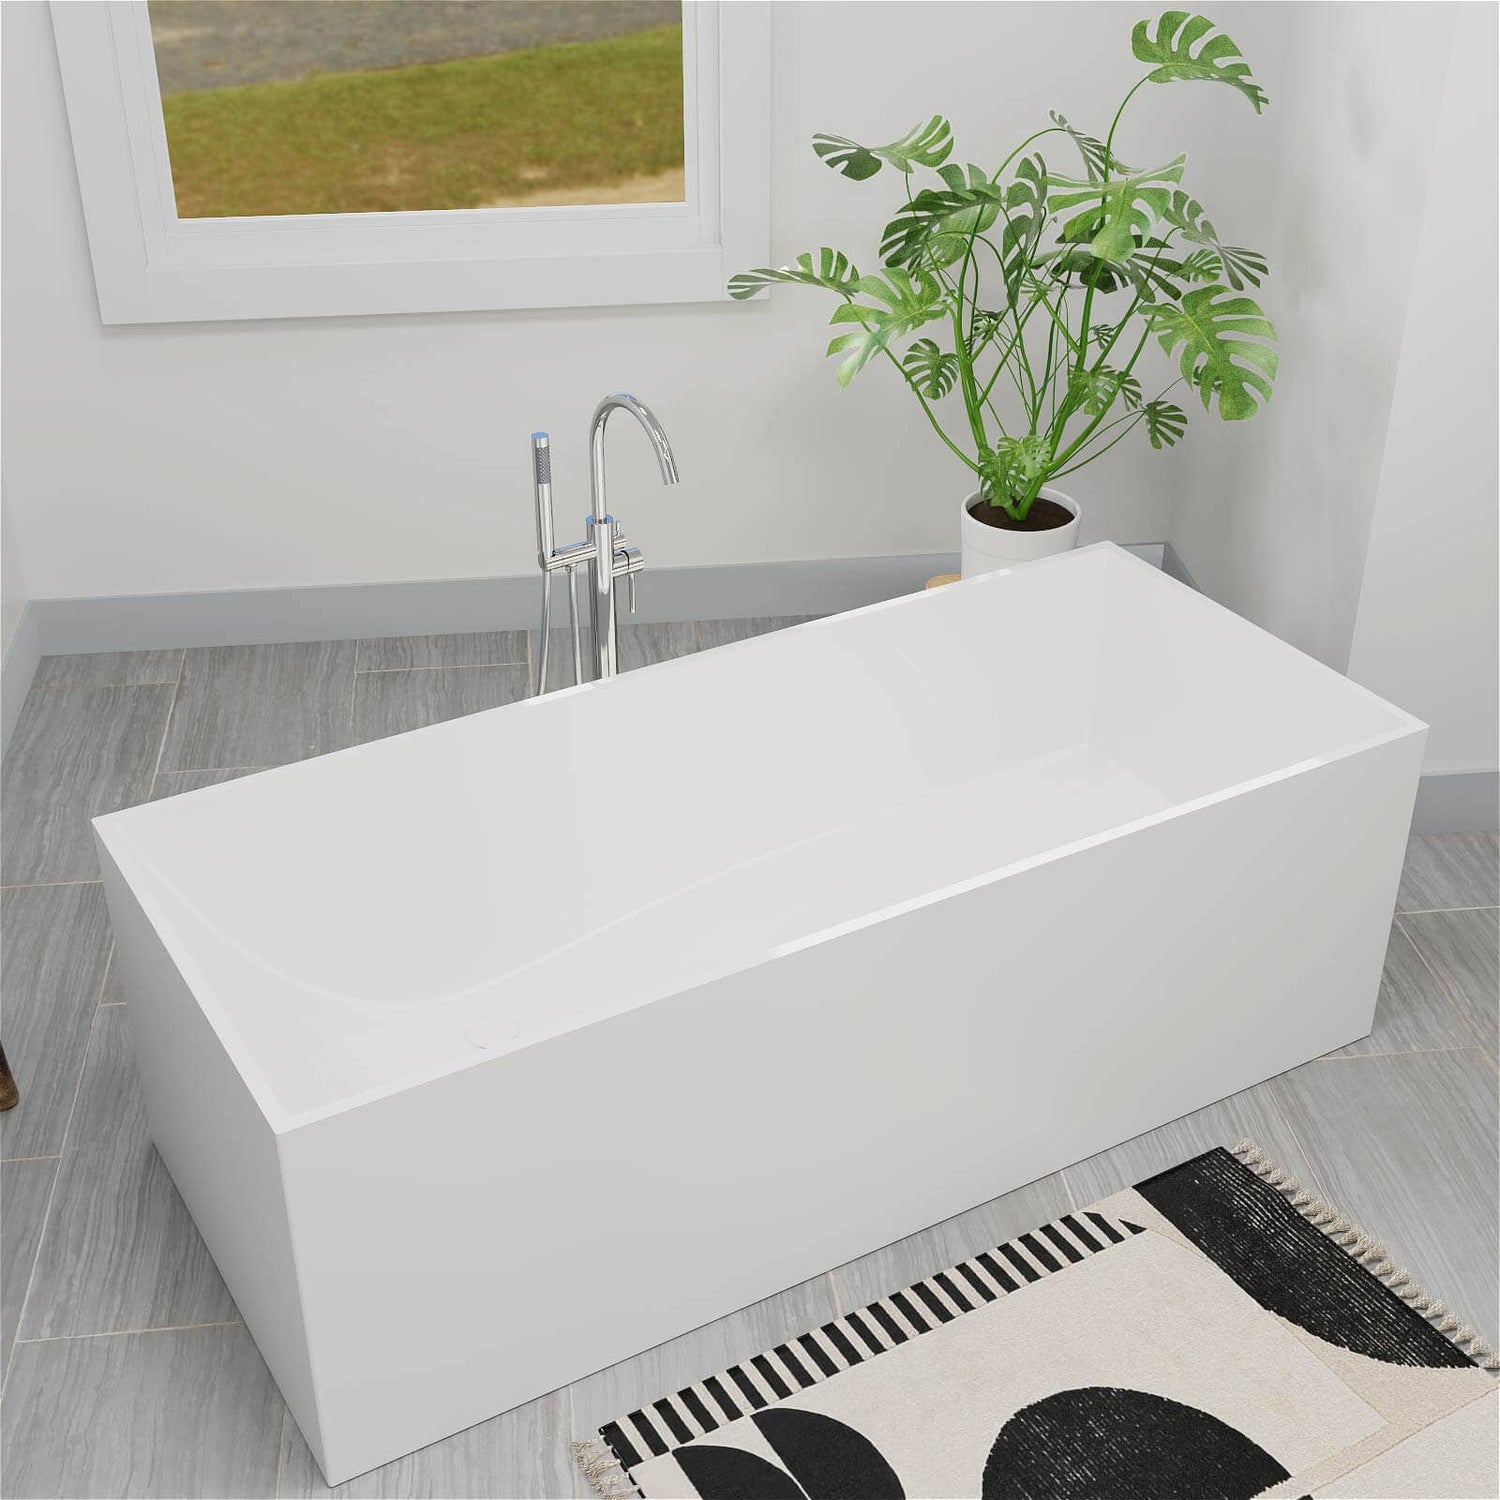 Ergonomic Bathtub Rectangular and Freestanding design